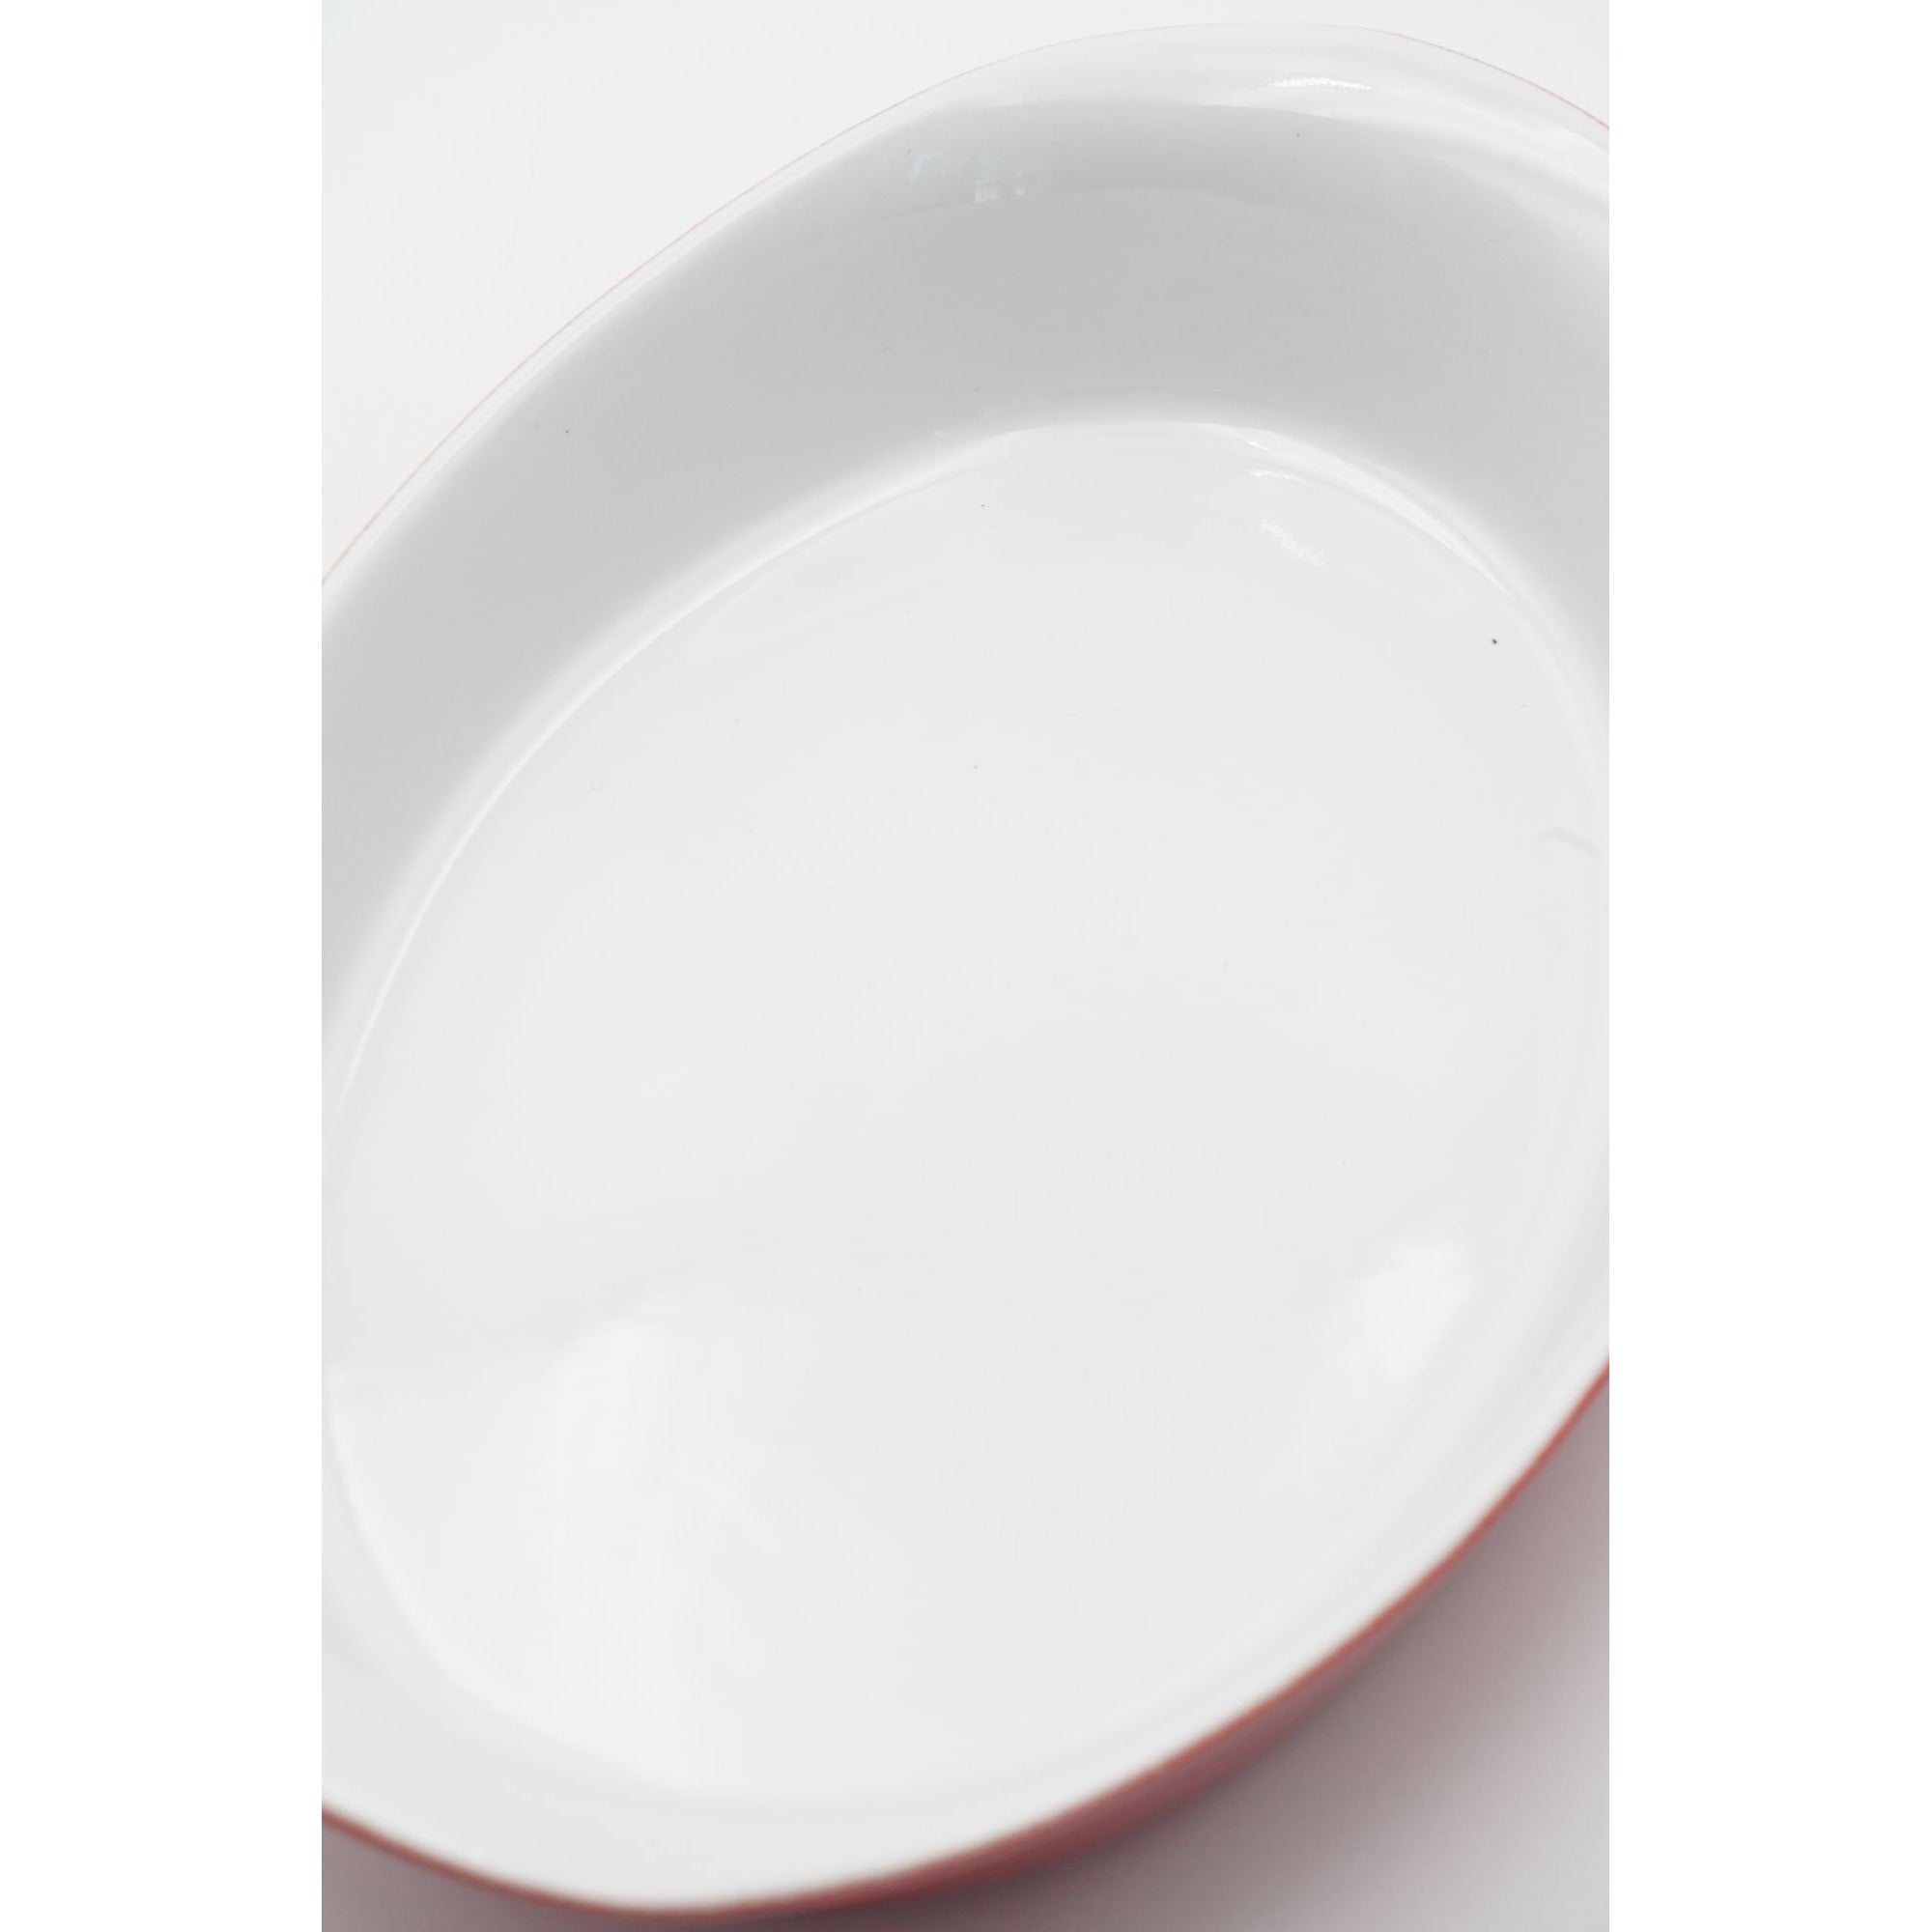 Cerutil Stoneware Portugal Oval Casserole / Baking Dish Red White 11.5" x 7.25"